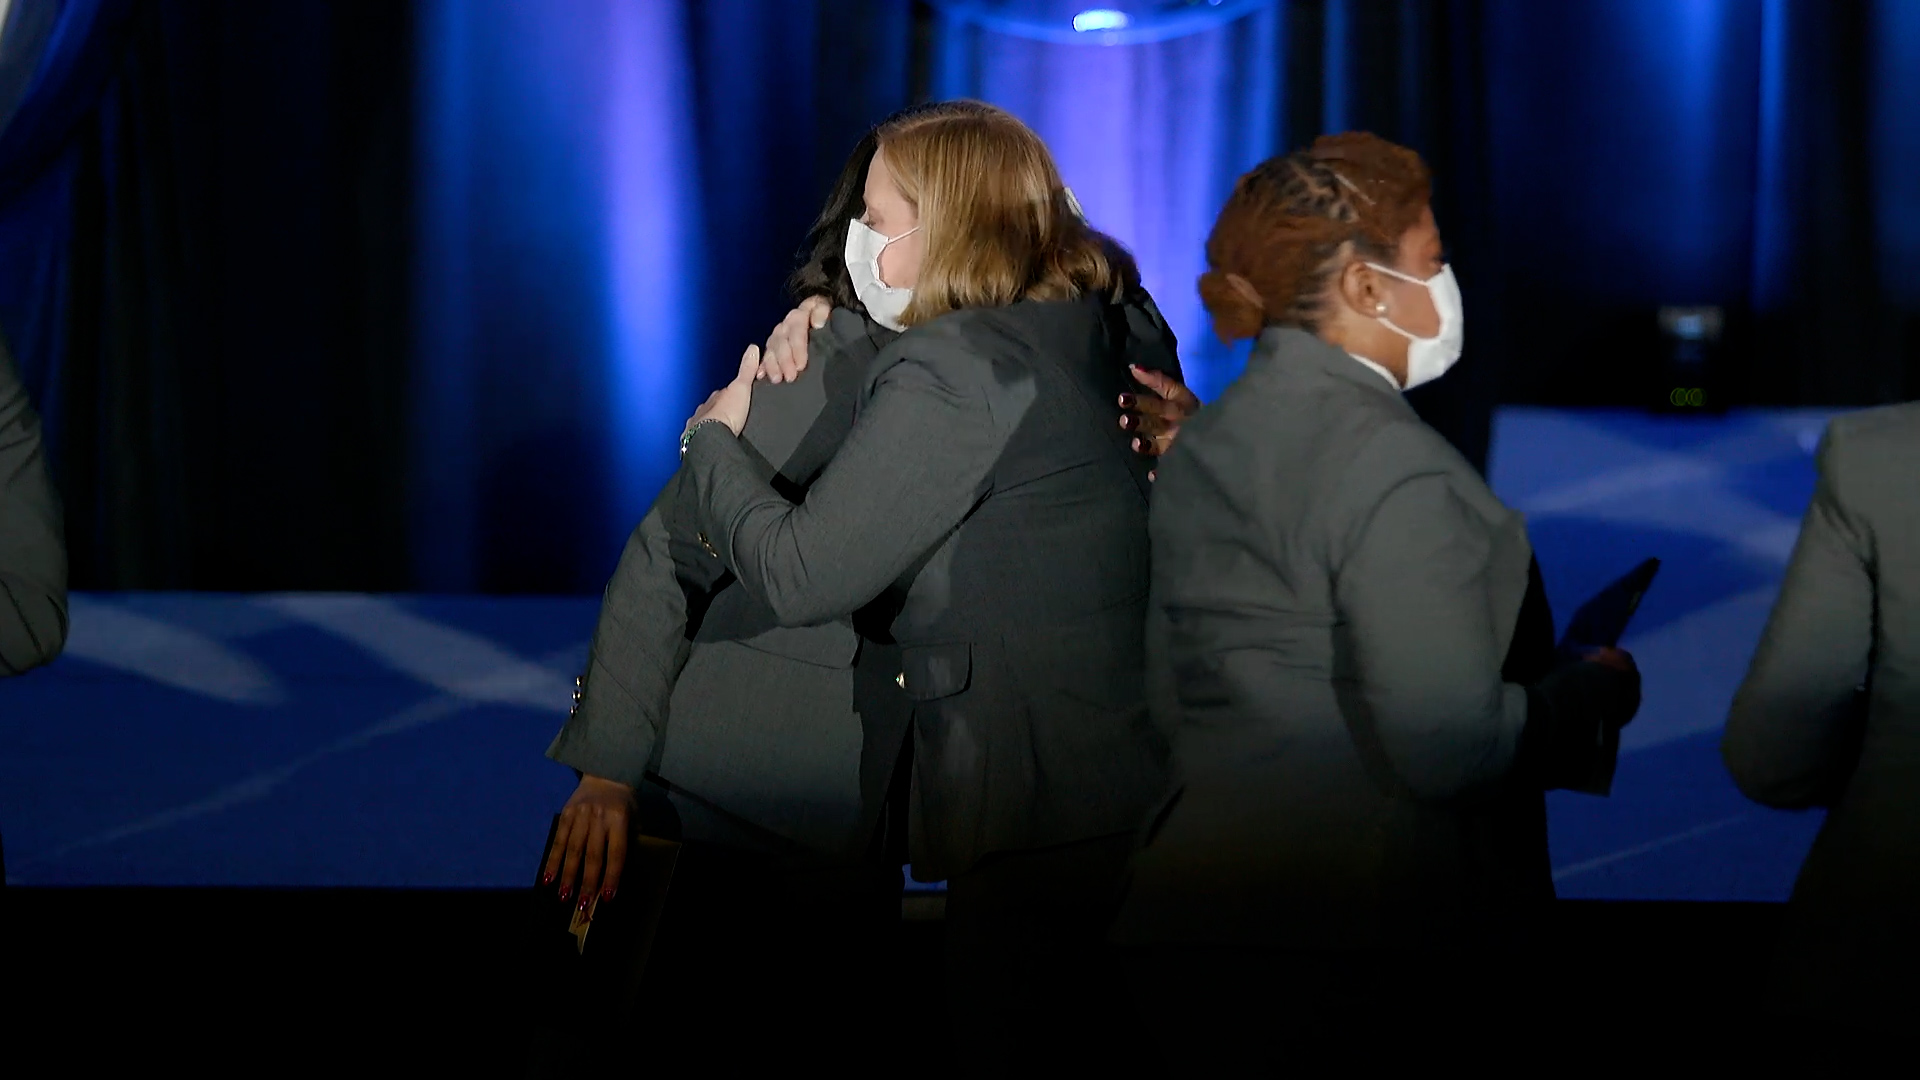 Flight attendants exchange hugs after graduation